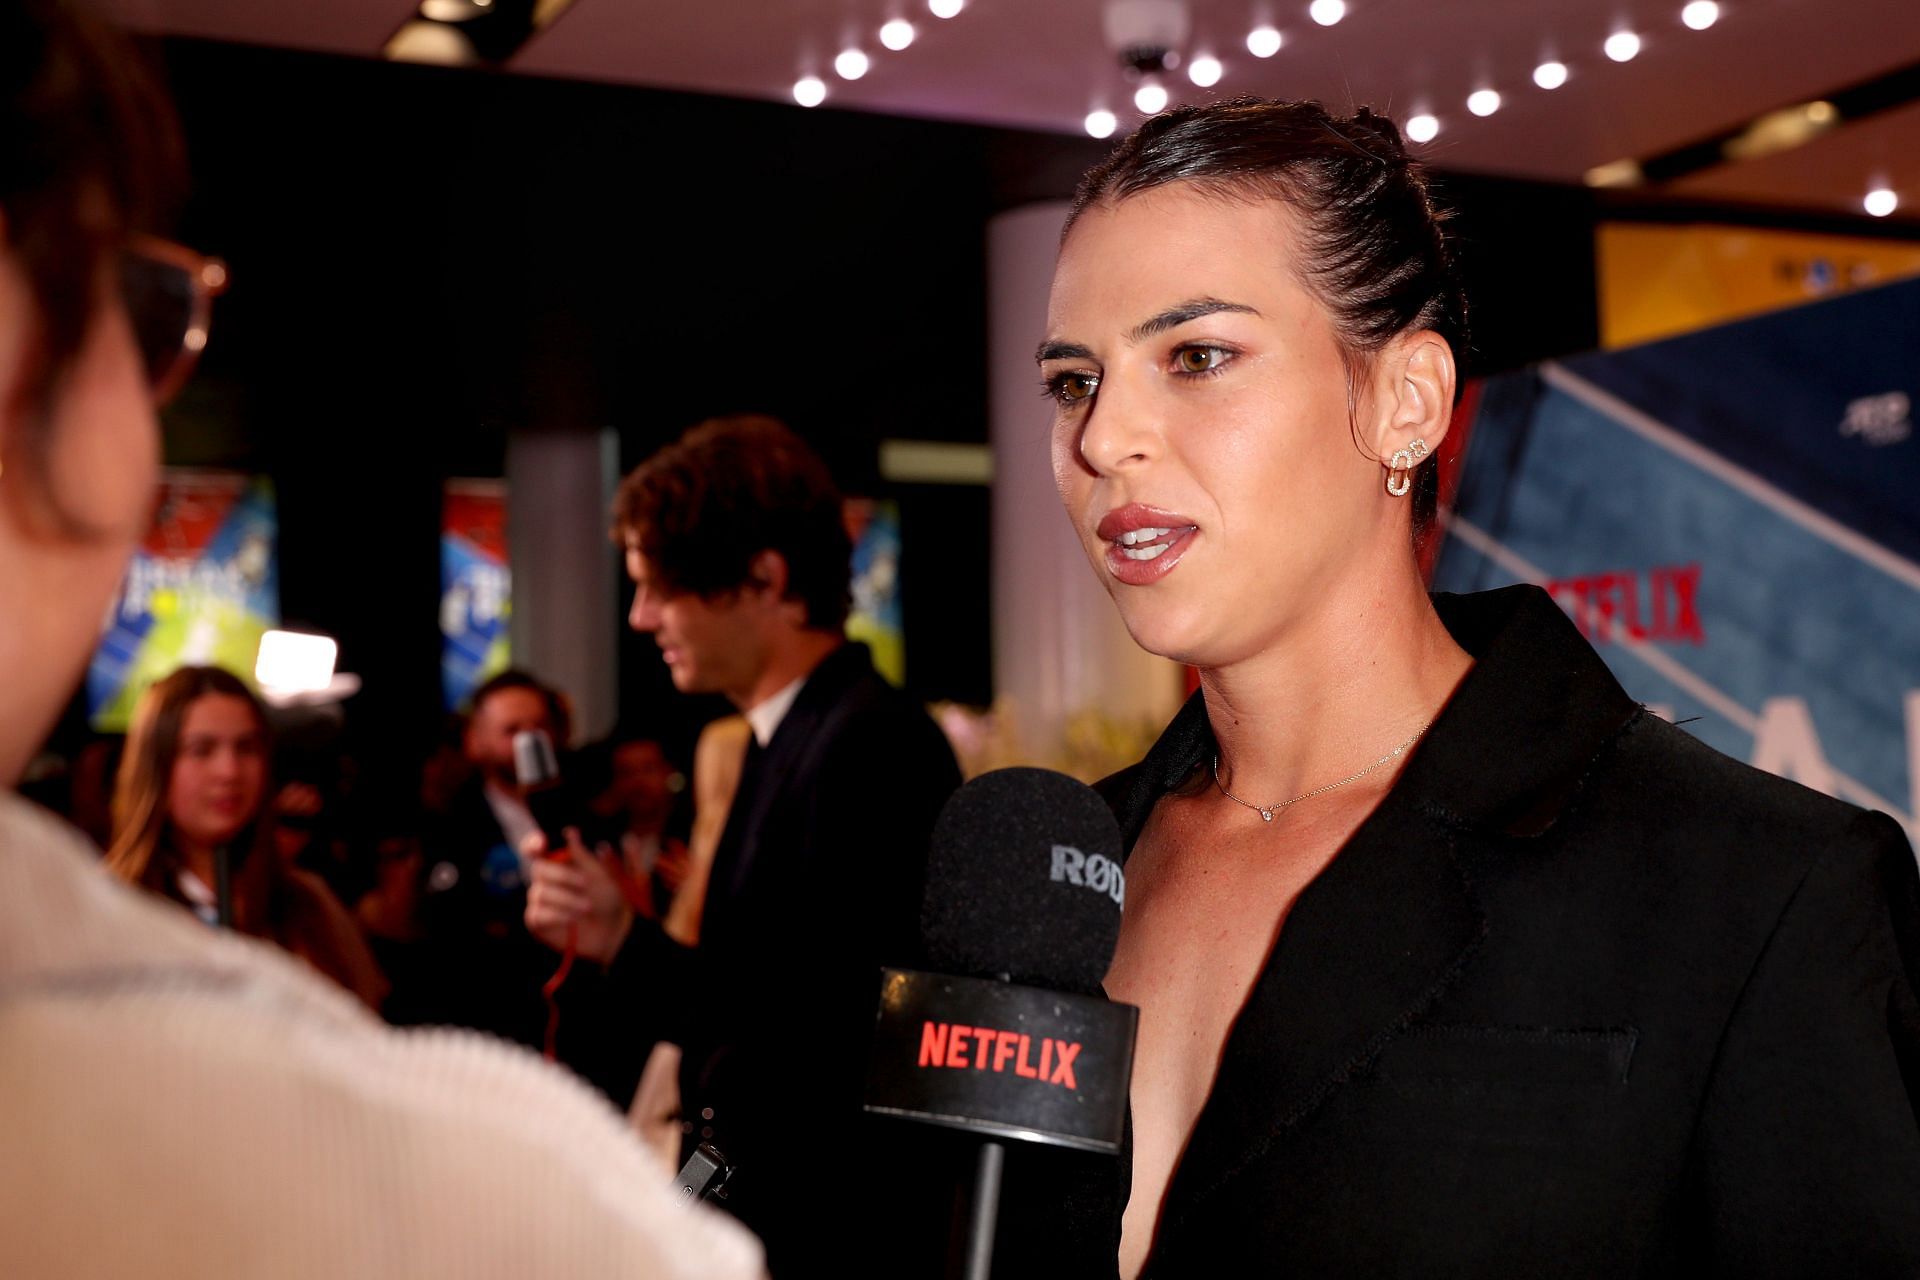 Ajla Tomljanovic during a Netflix event ahead of the 2023 Australian Open